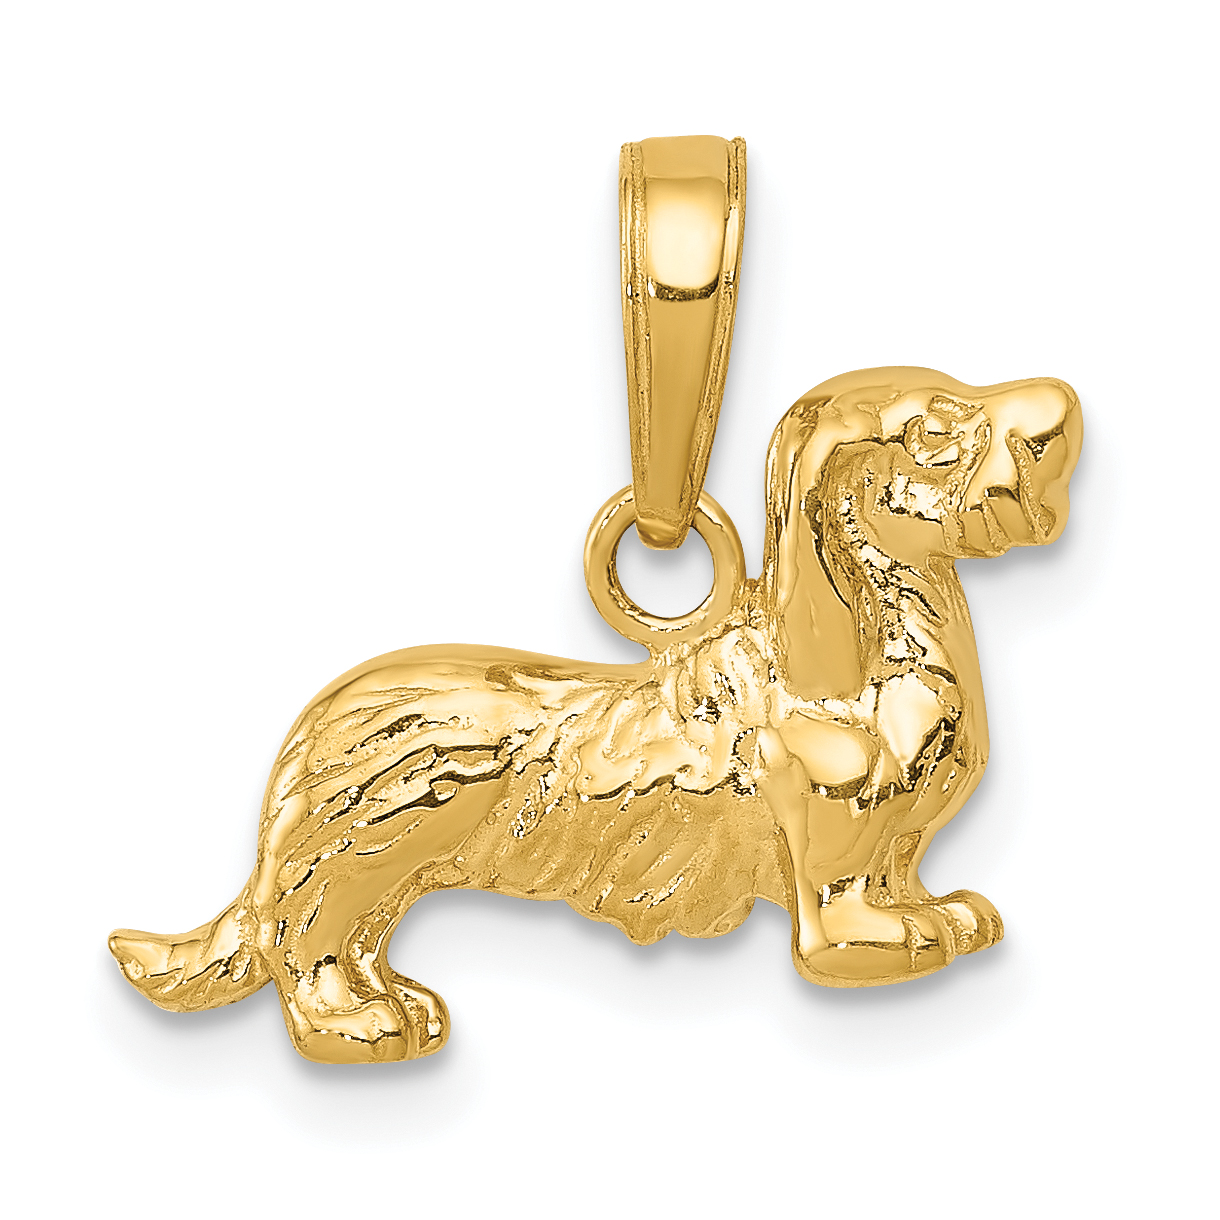 Genuine 14k Yellow Gold Long-Haired Dachshund Dog Pendant 14x17mm 1.4 grams